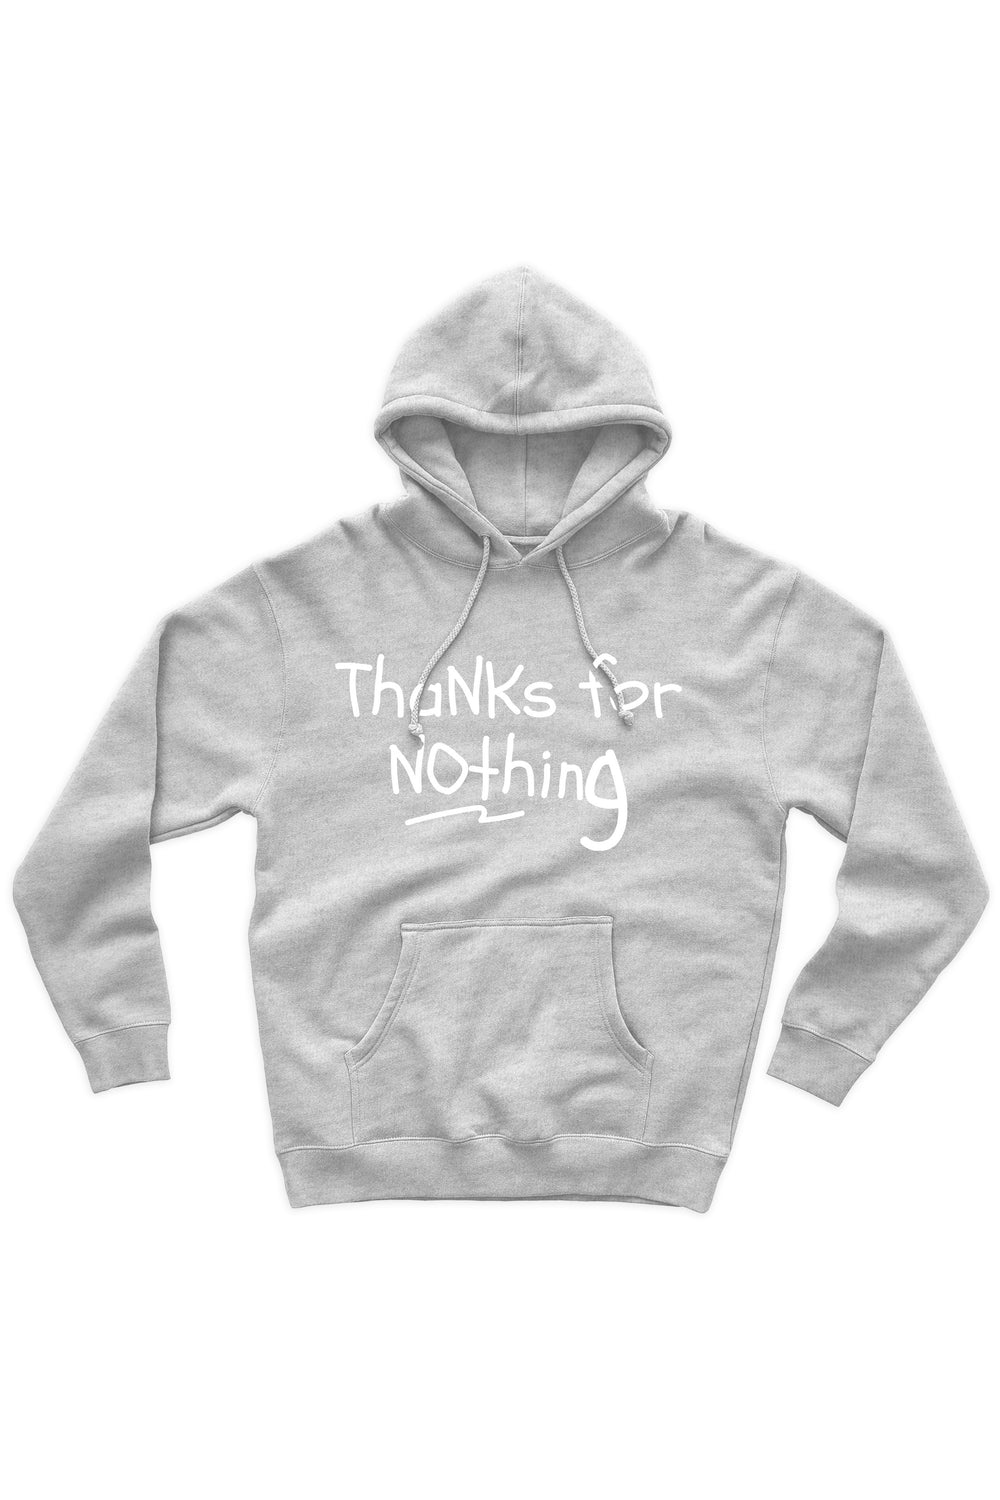 Thanks For Nothing Hoodie (White Logo) - Zamage